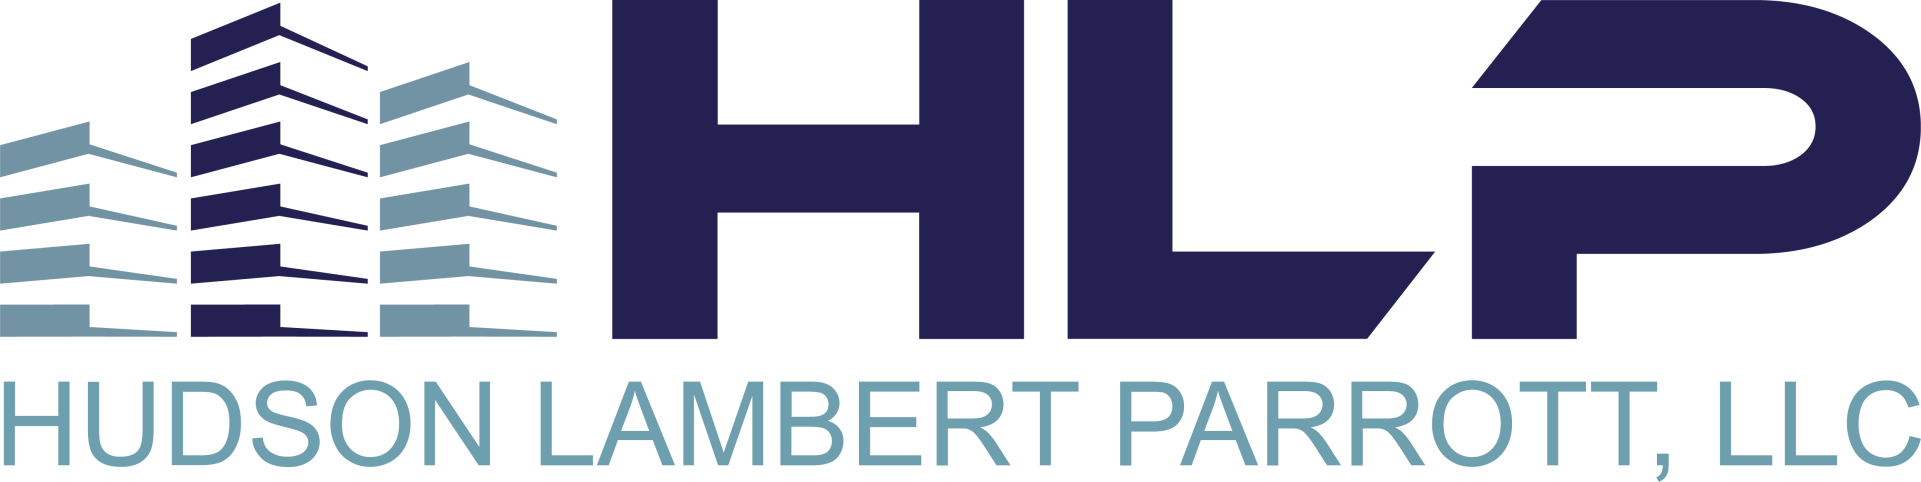 Hudson Lamber Parrott, LLC logo